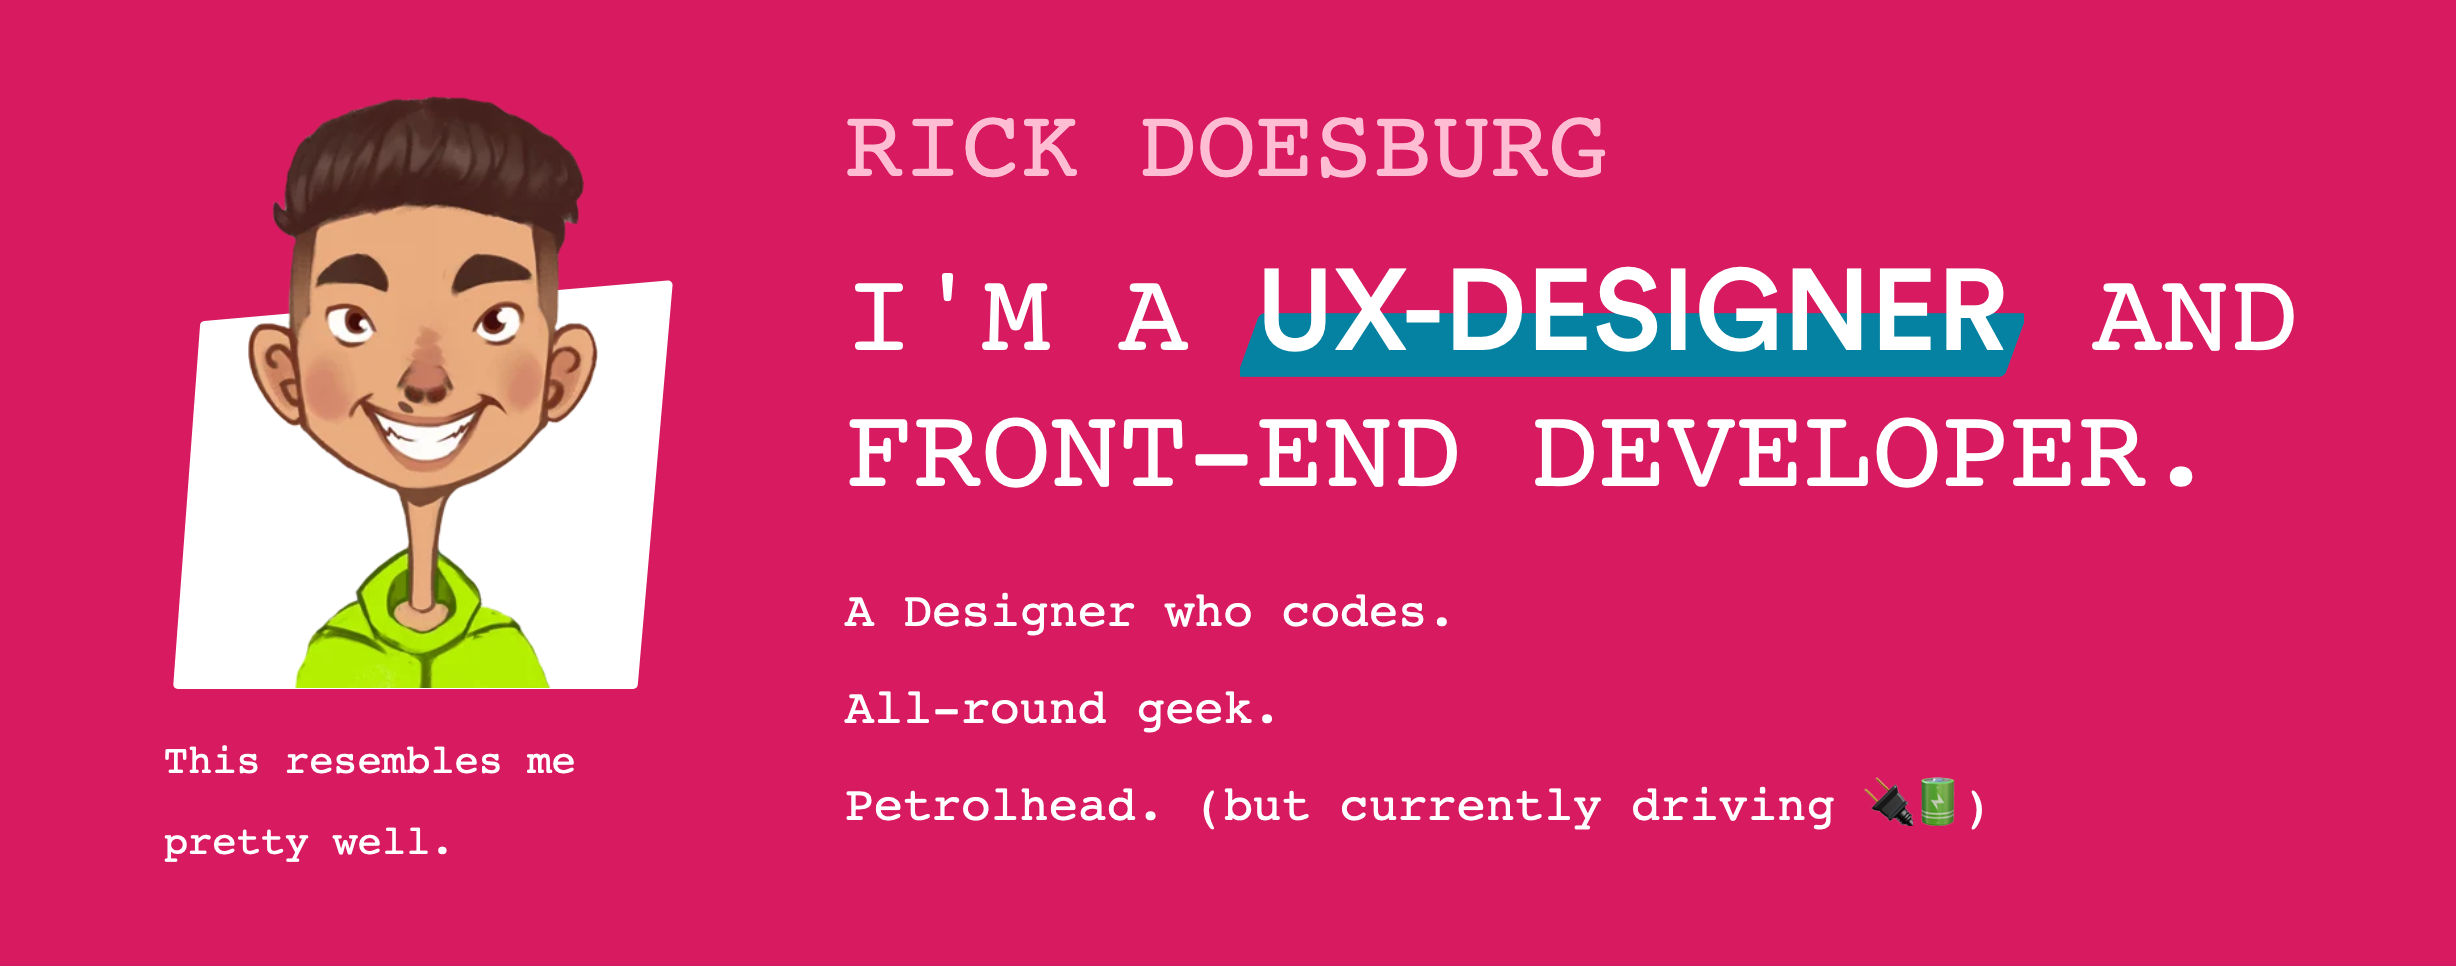 Rick Doesburg, UX-Designer